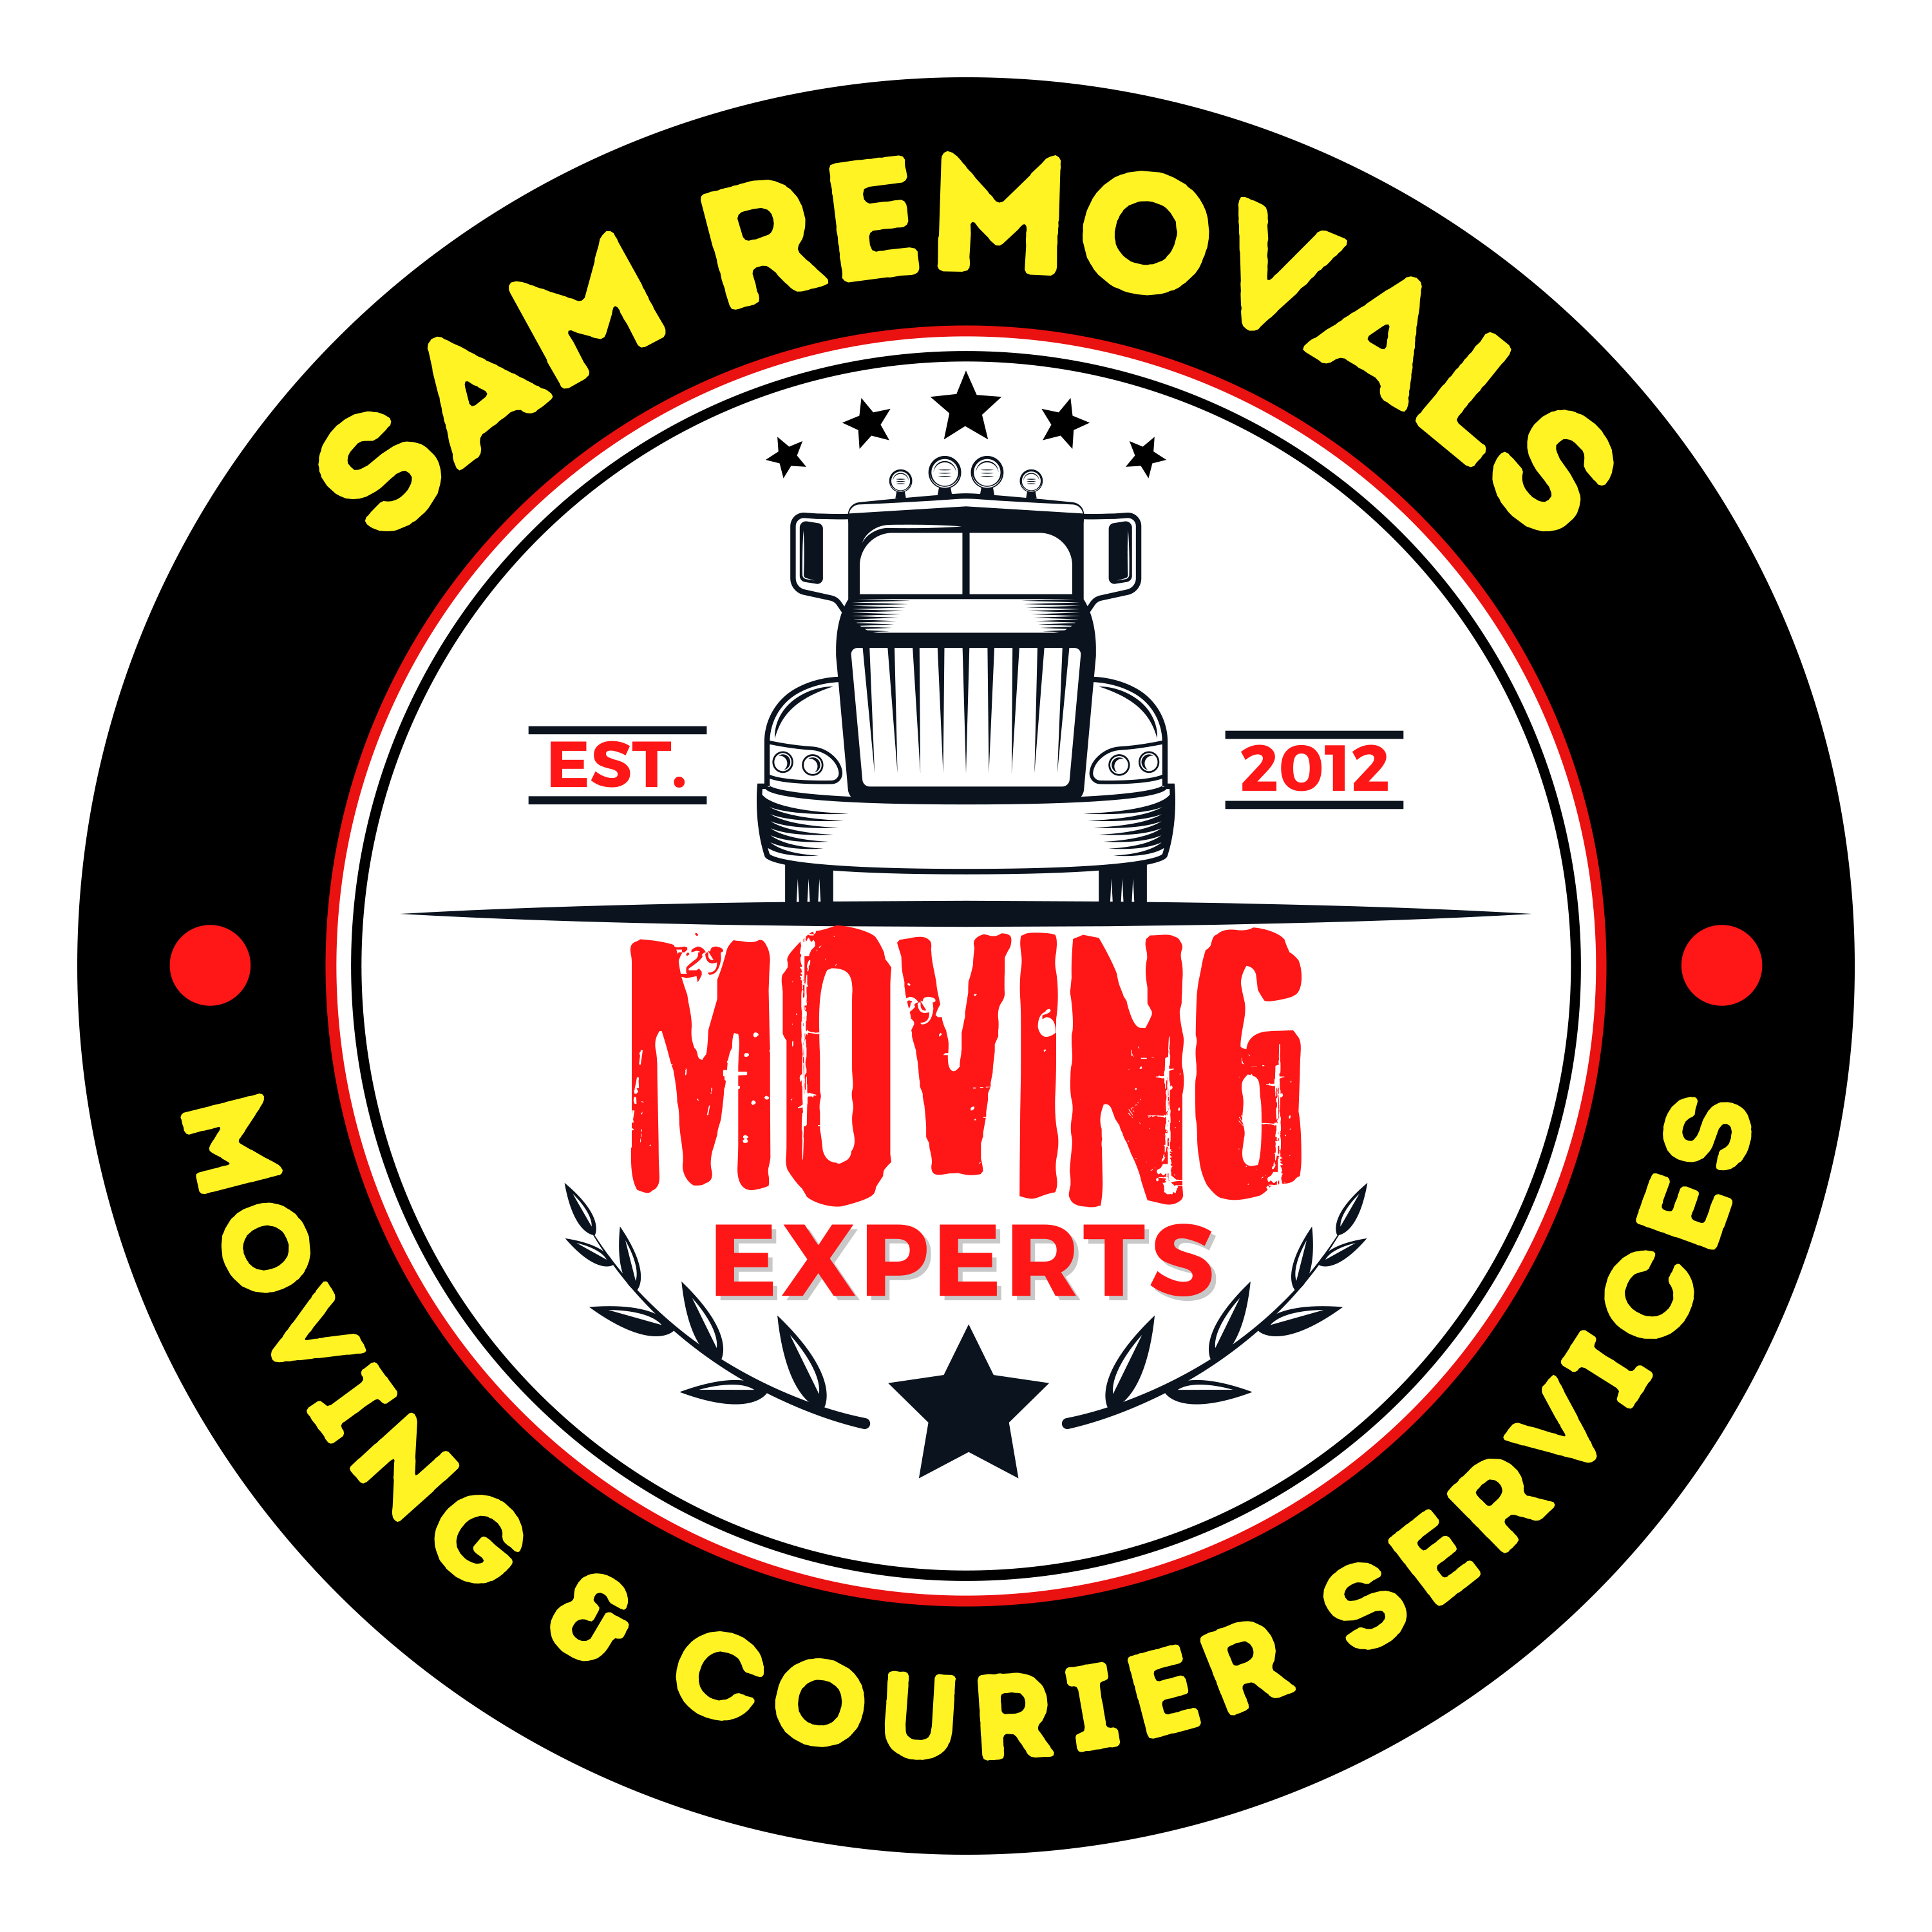 Sam Removals